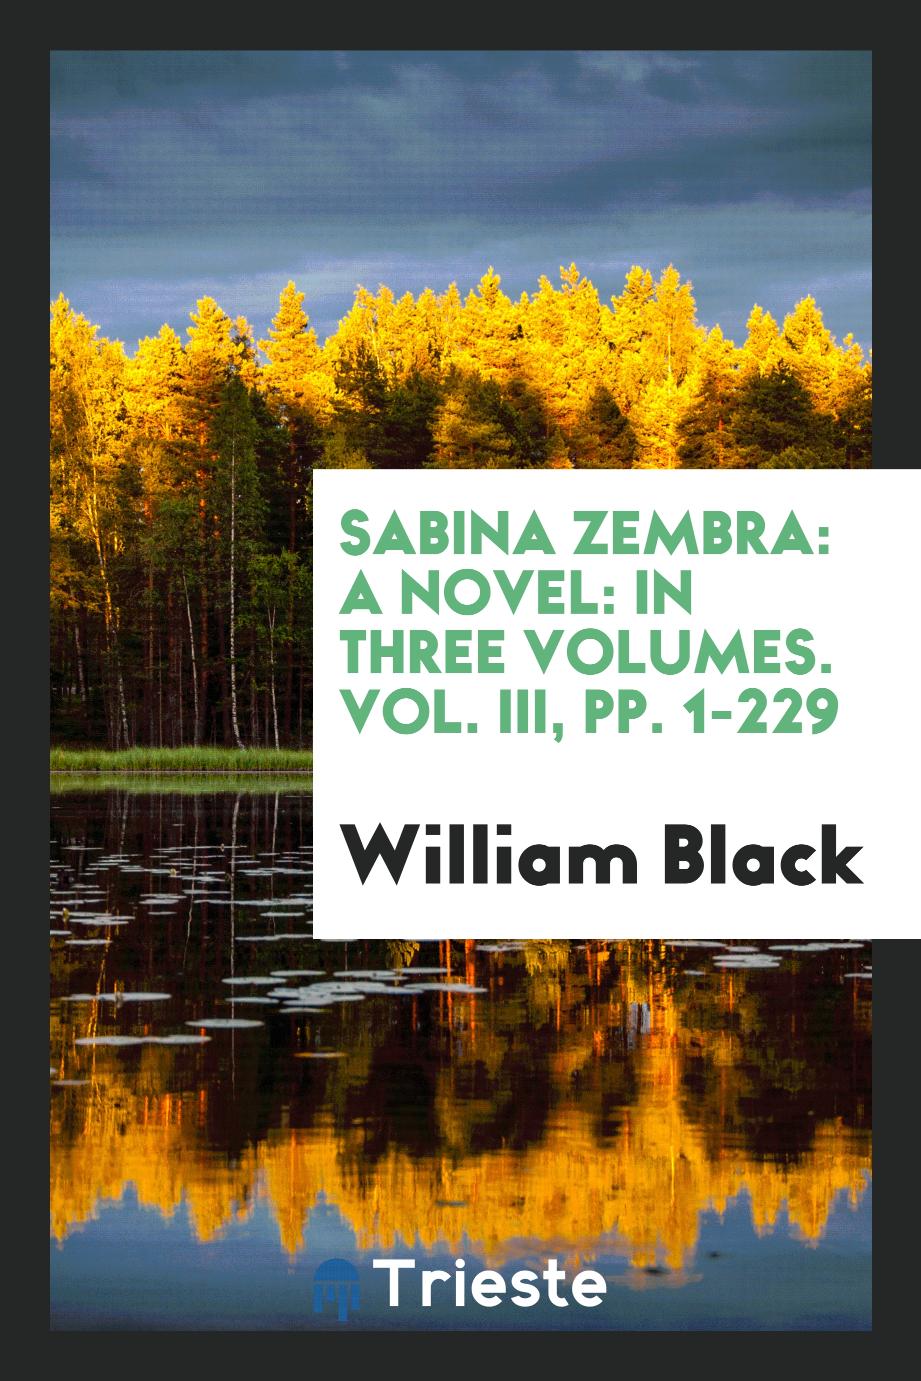 Sabina Zembra: A Novel: In Three Volumes. Vol. III, pp. 1-229